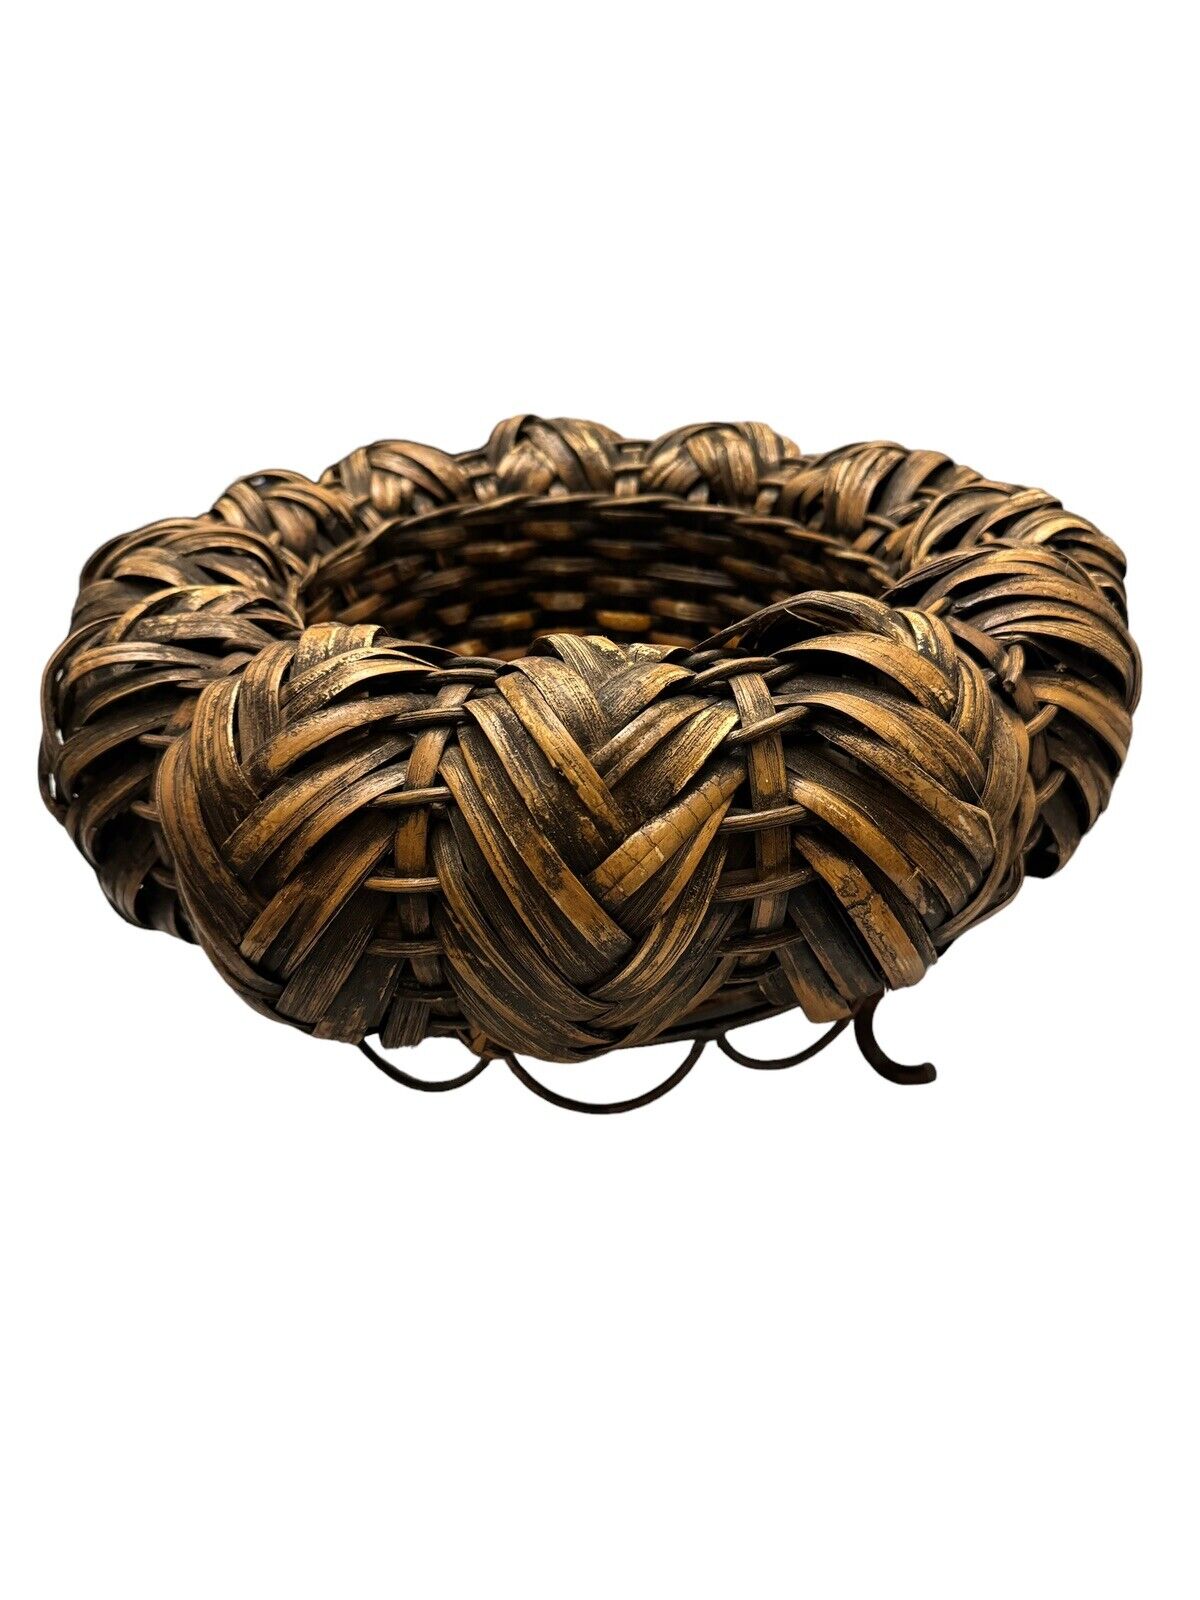 Large Japanese Woven Weaved Bamboo Metal Footed Multi Purpose Basket 17”W x 9”H